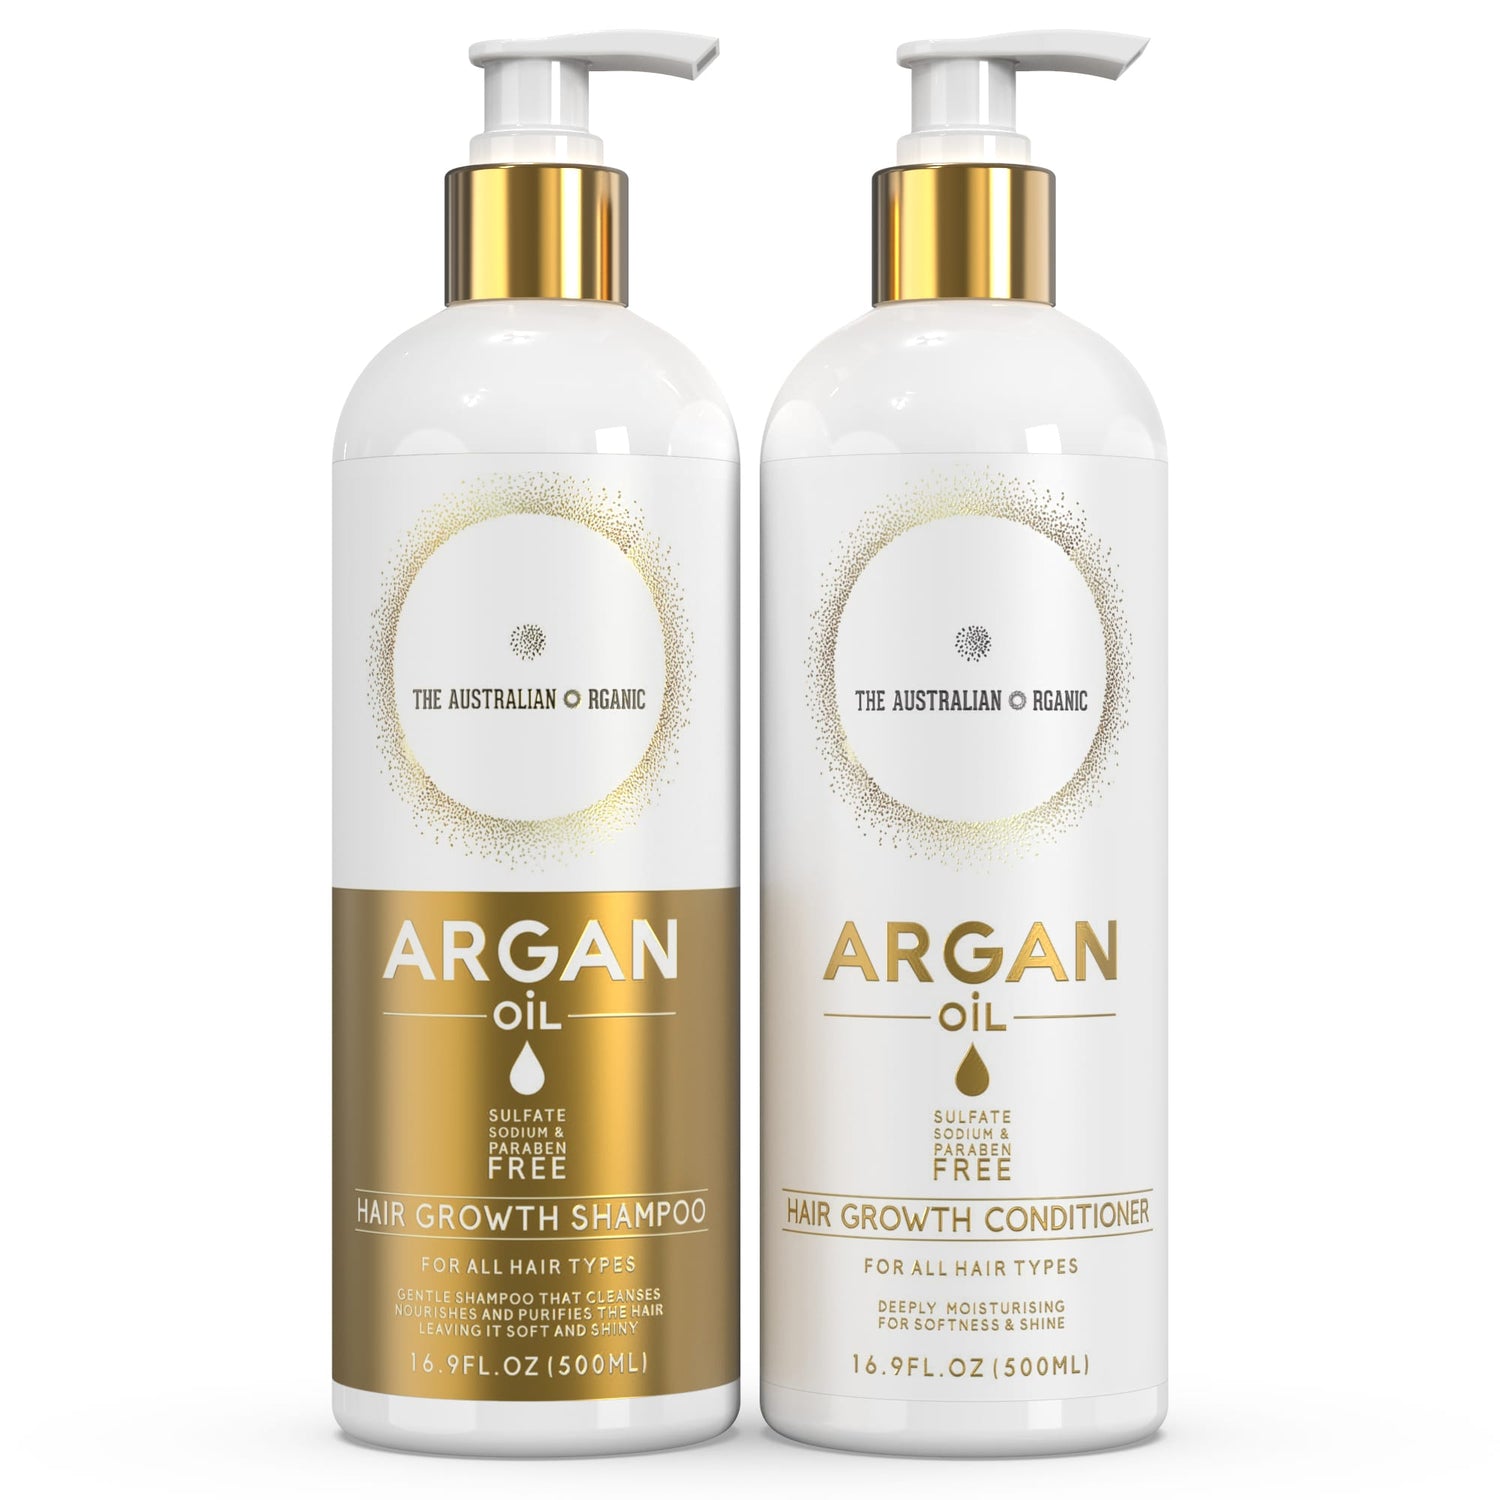 The Australian Organic Argan Oil Hair Growth bundle